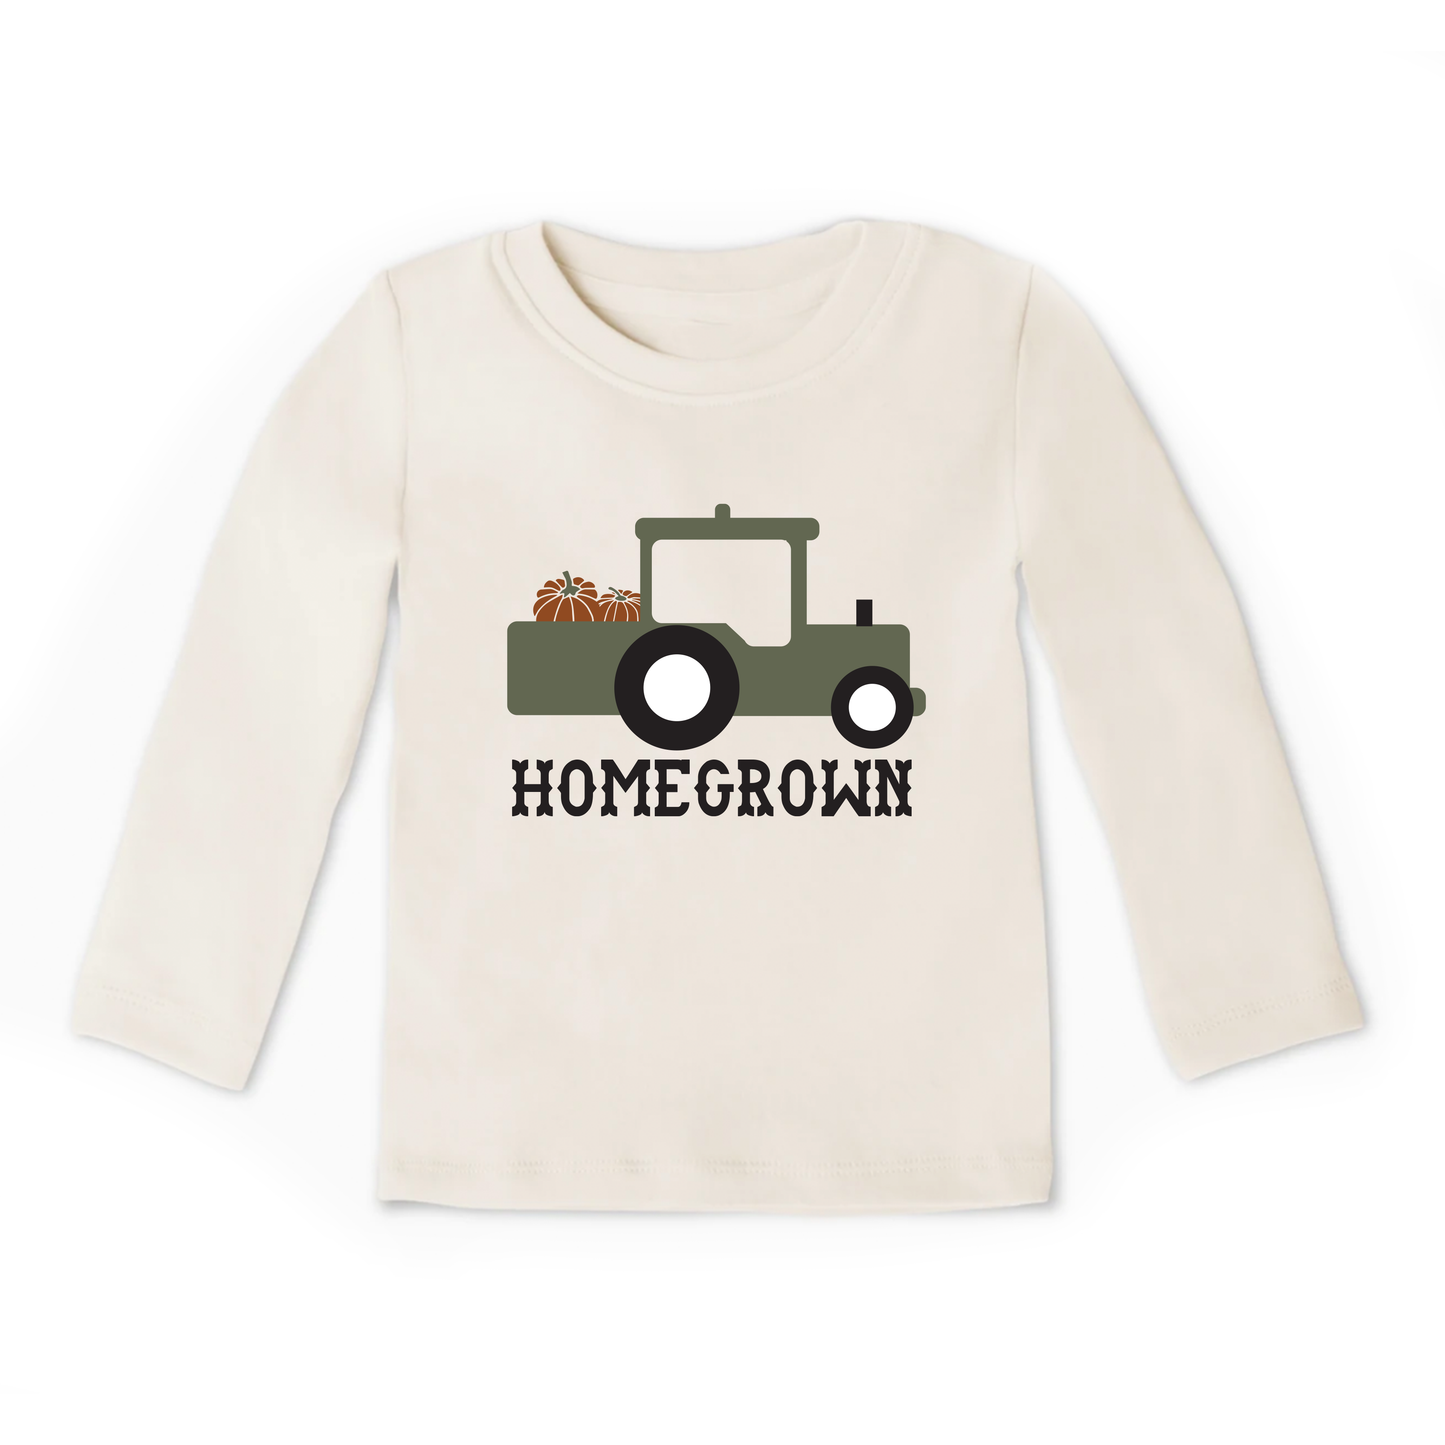 Homegrown Toddler Long Sleeve Shirt